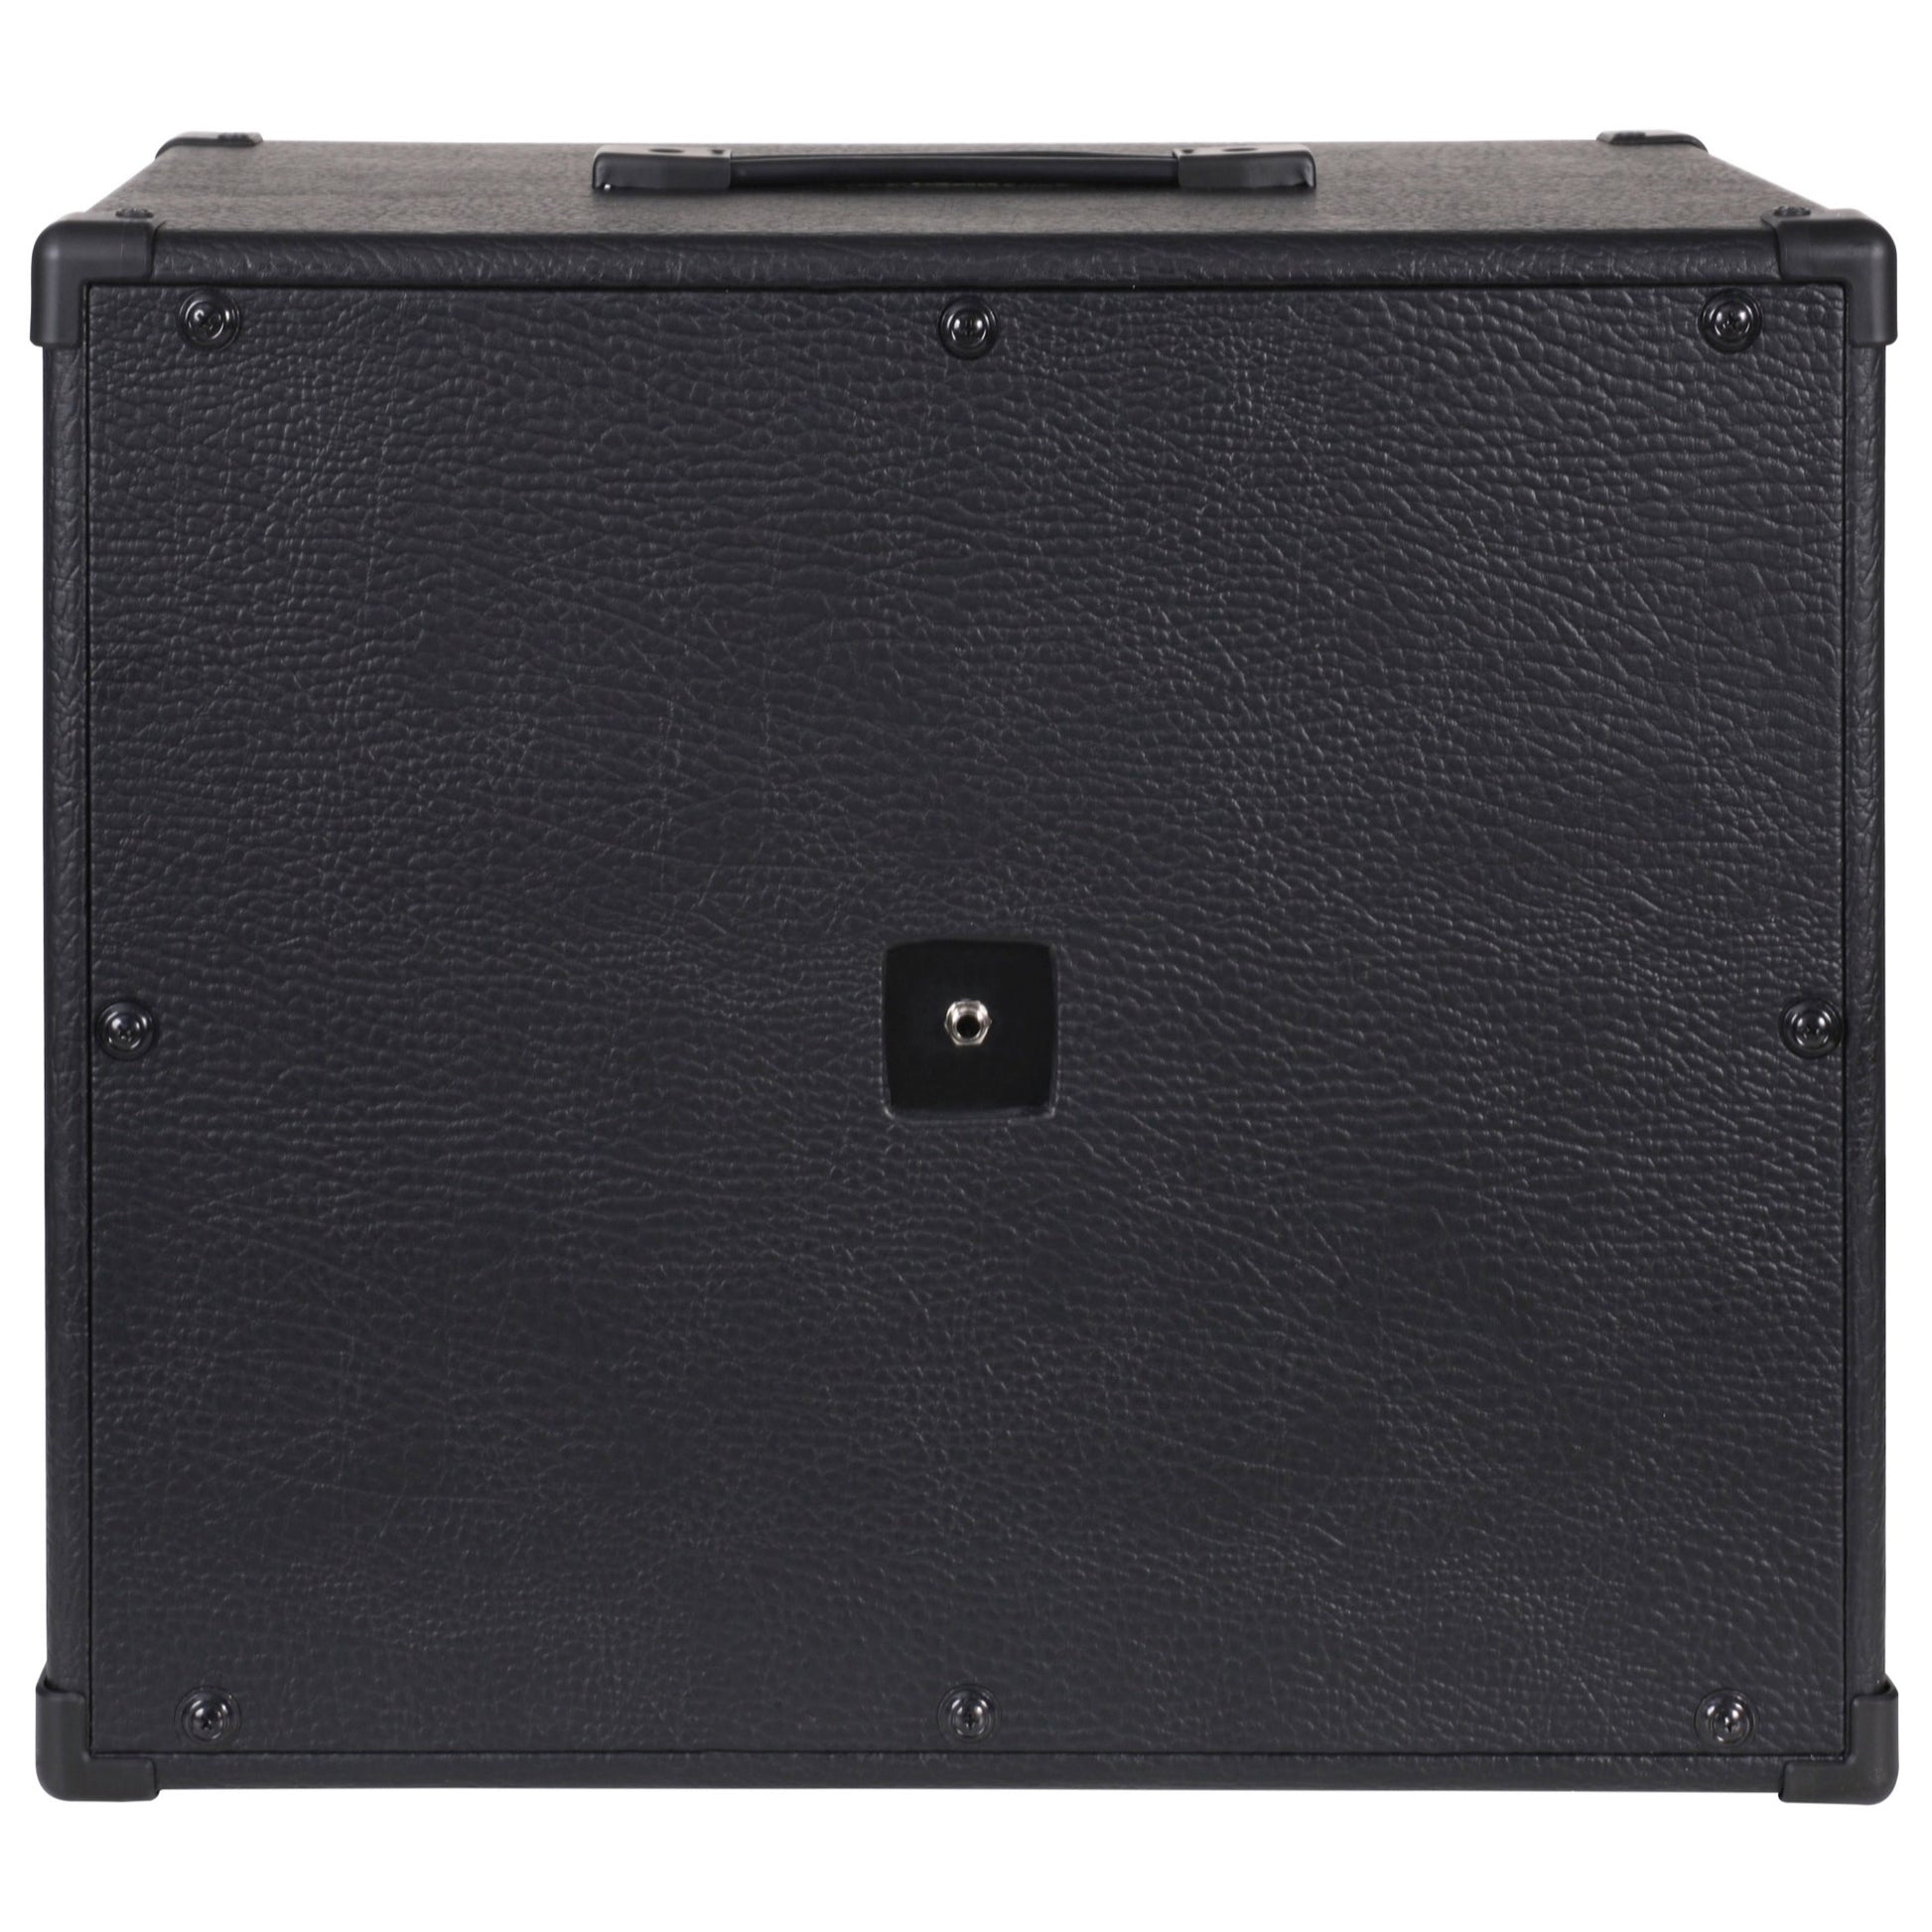 Peavey Vypyr 112 Guitar Speaker Cabinet (1x12 Inch)